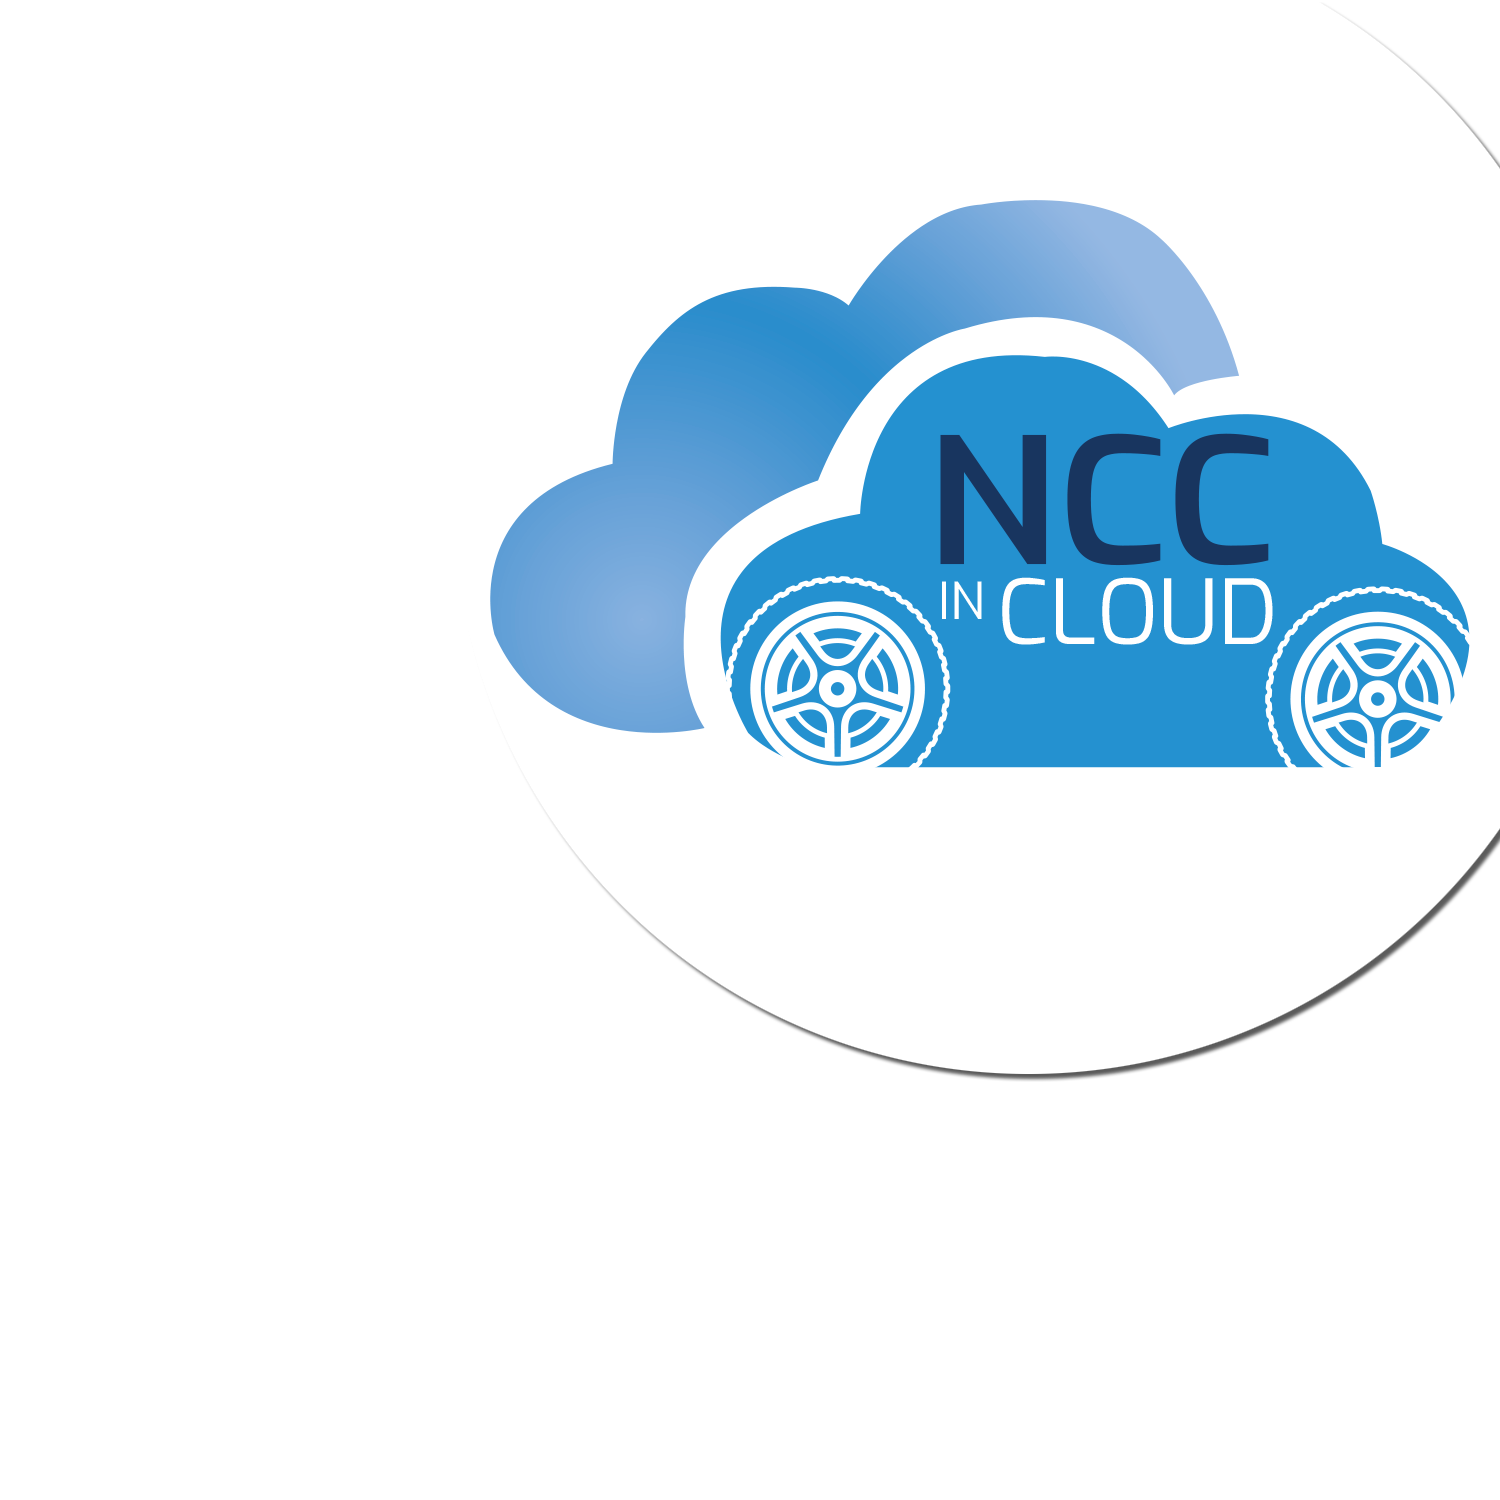 NCC in cloud - Antares 3000 Srl